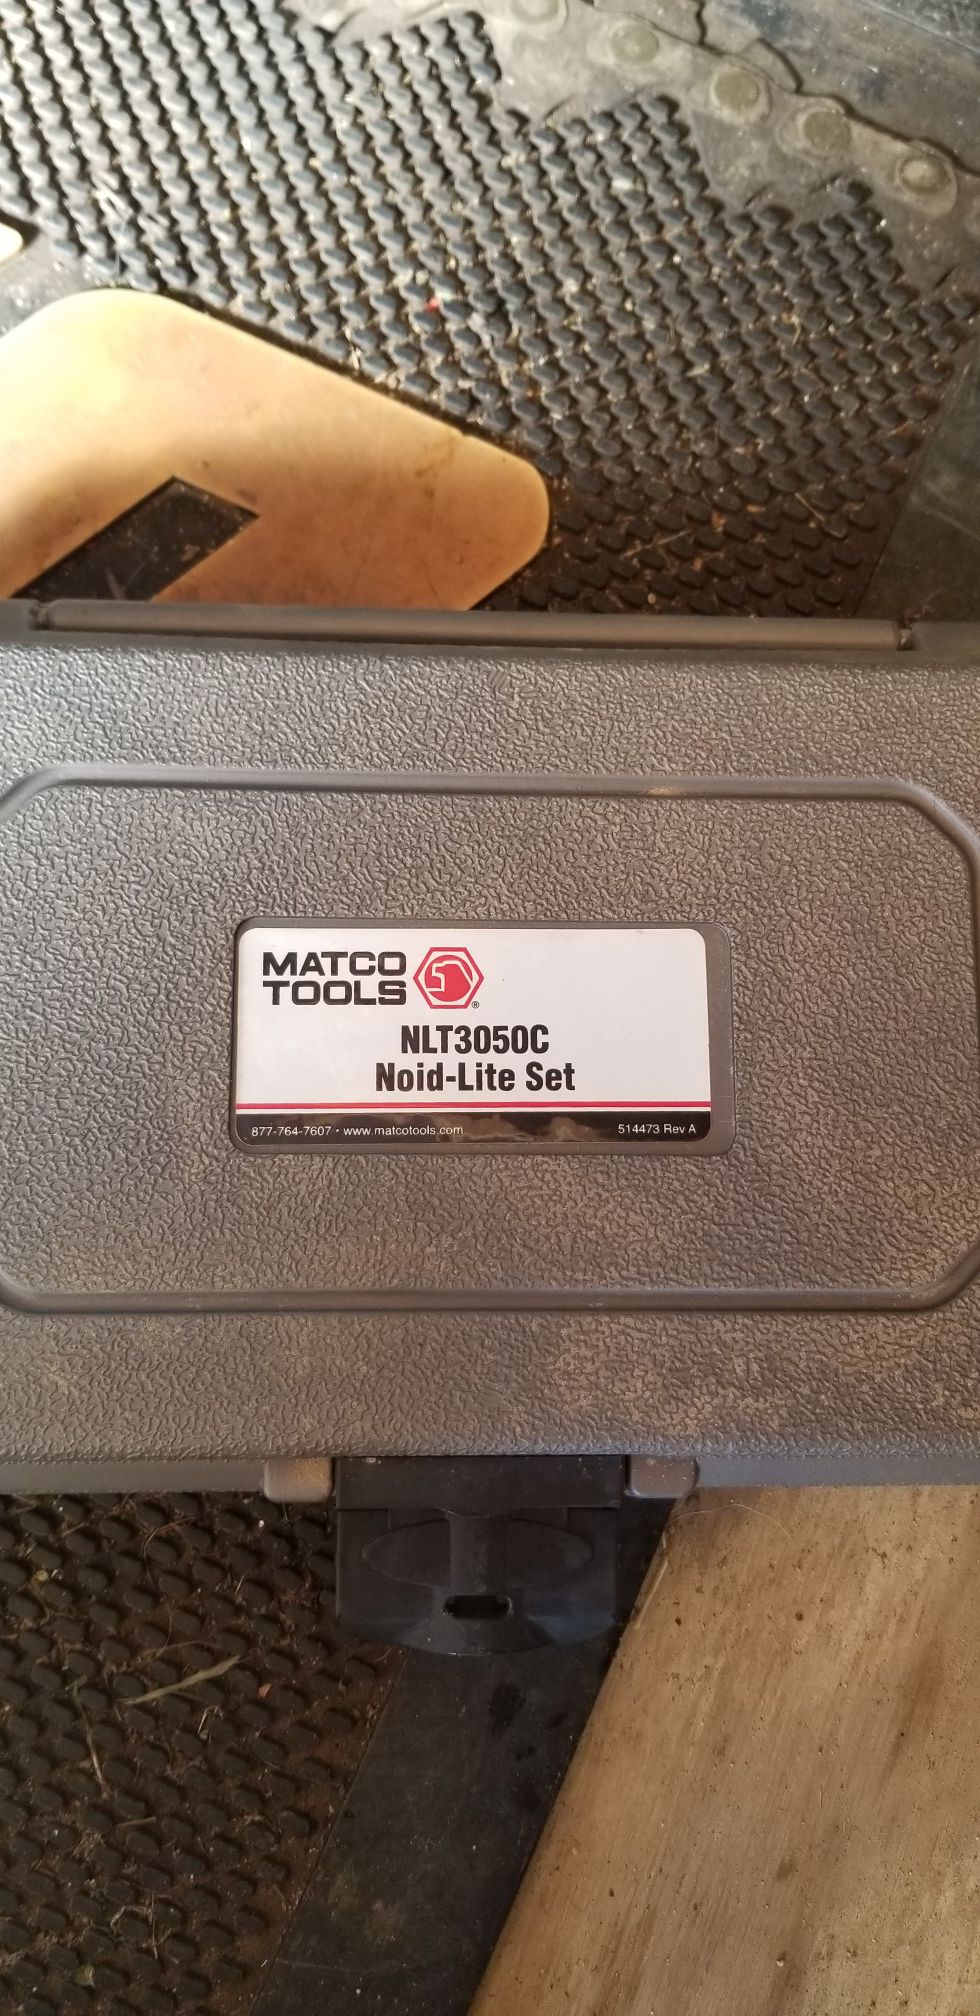 Matco NLT3050C Noid-lite set